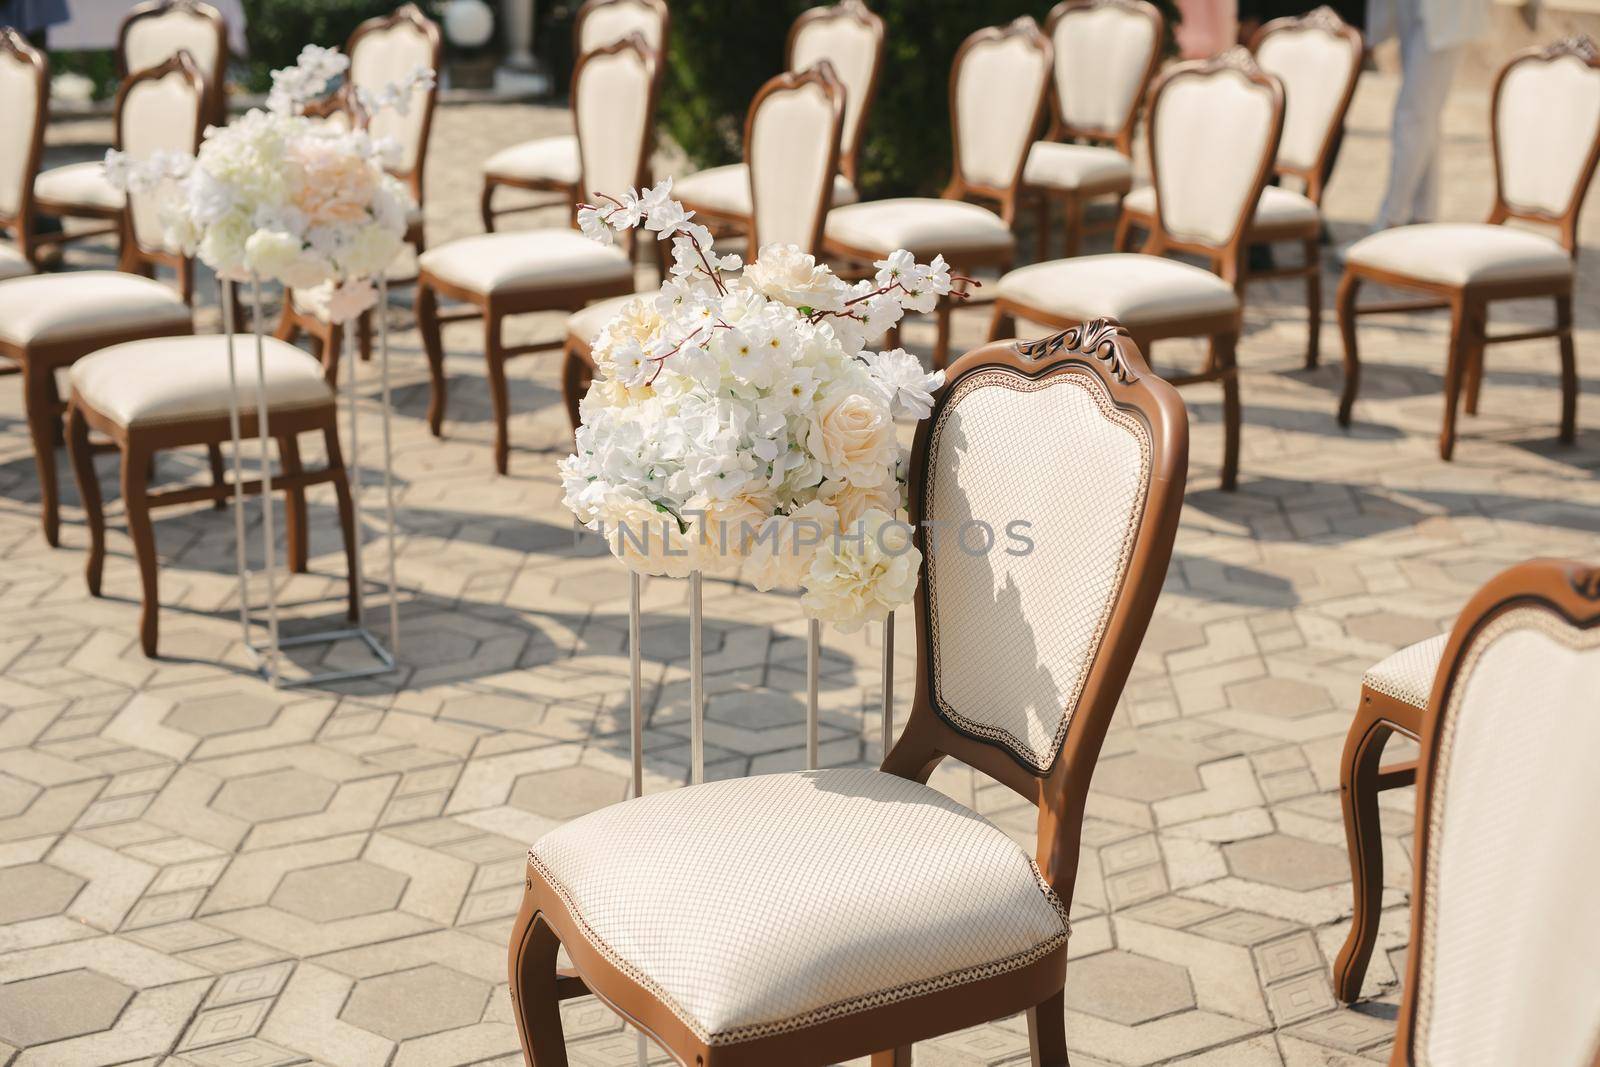 Beautiful wedding floral arrangement of seats along the aisle